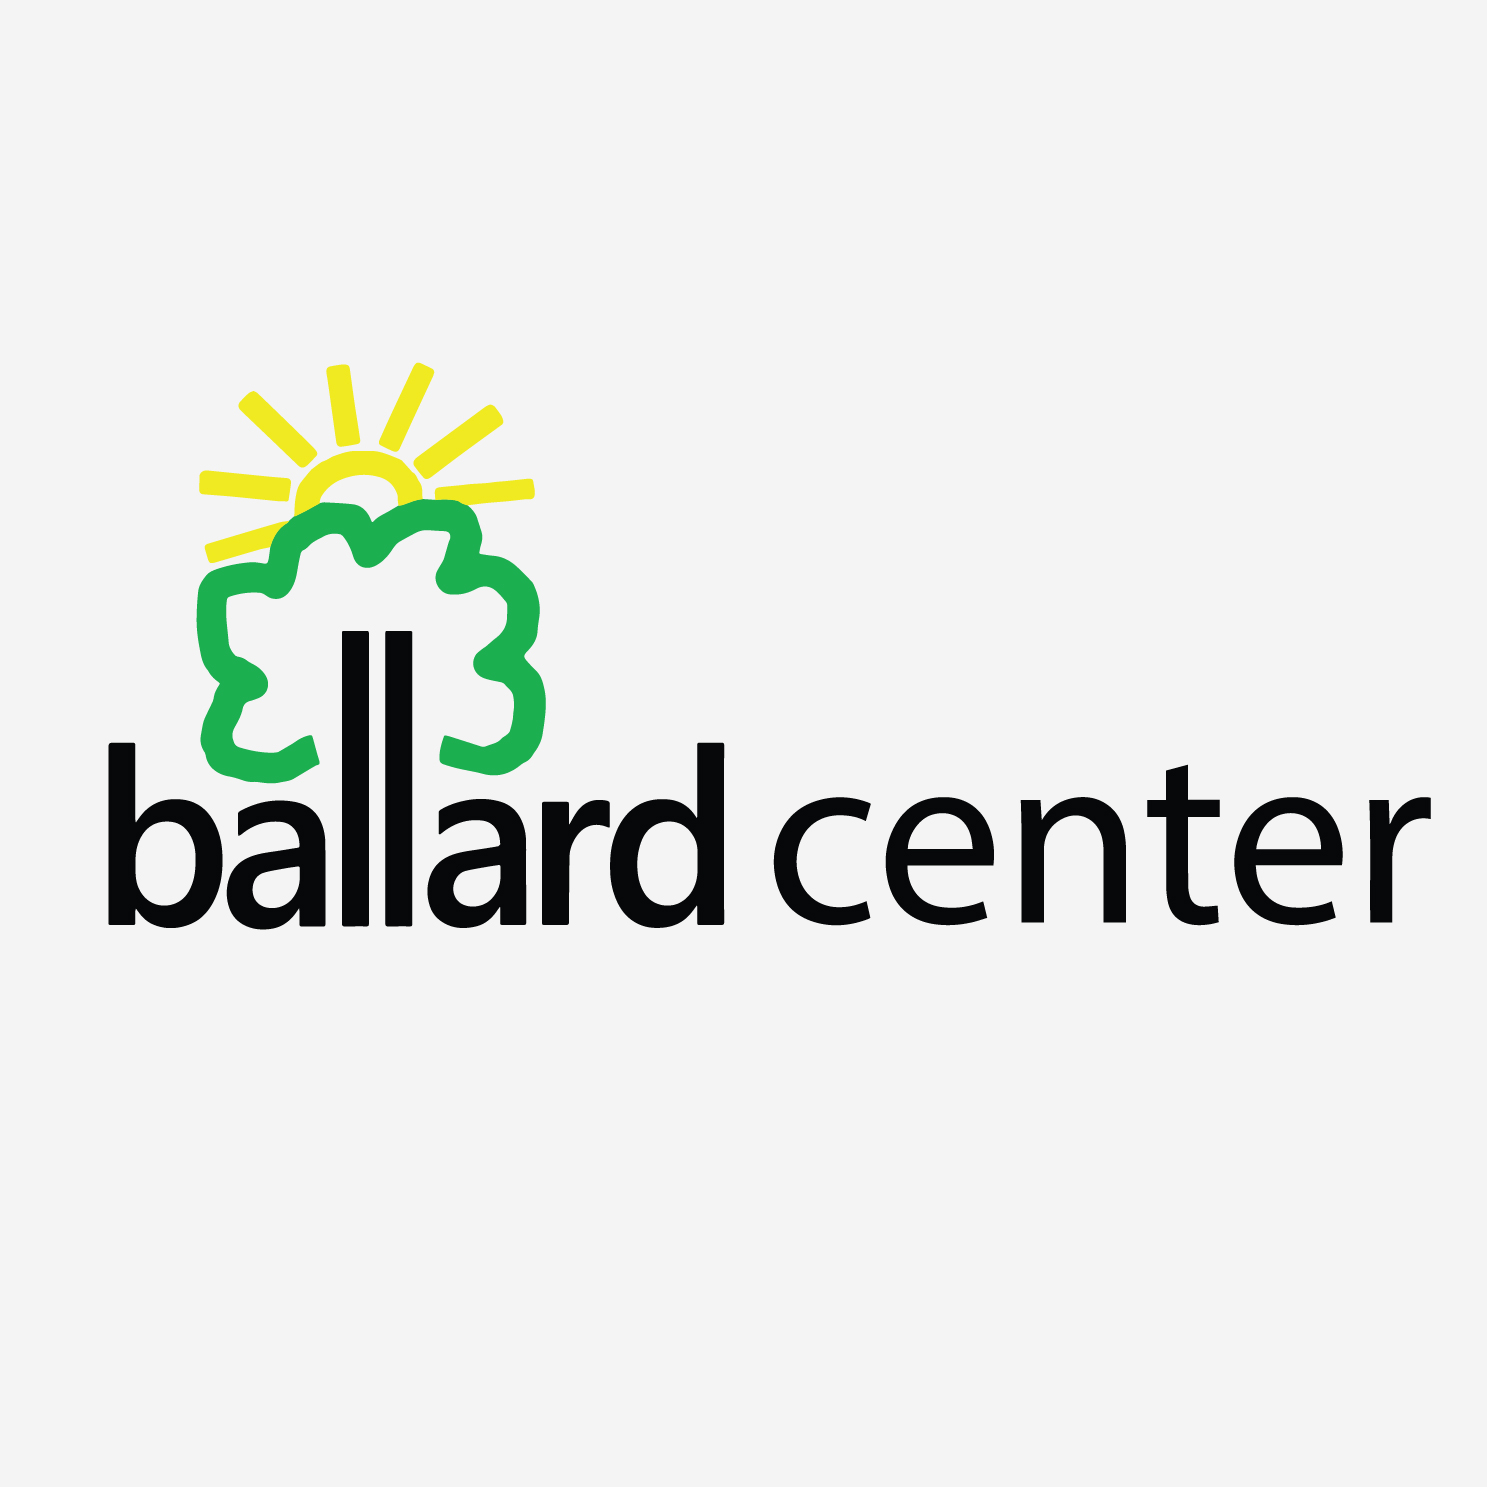 Ballard Center